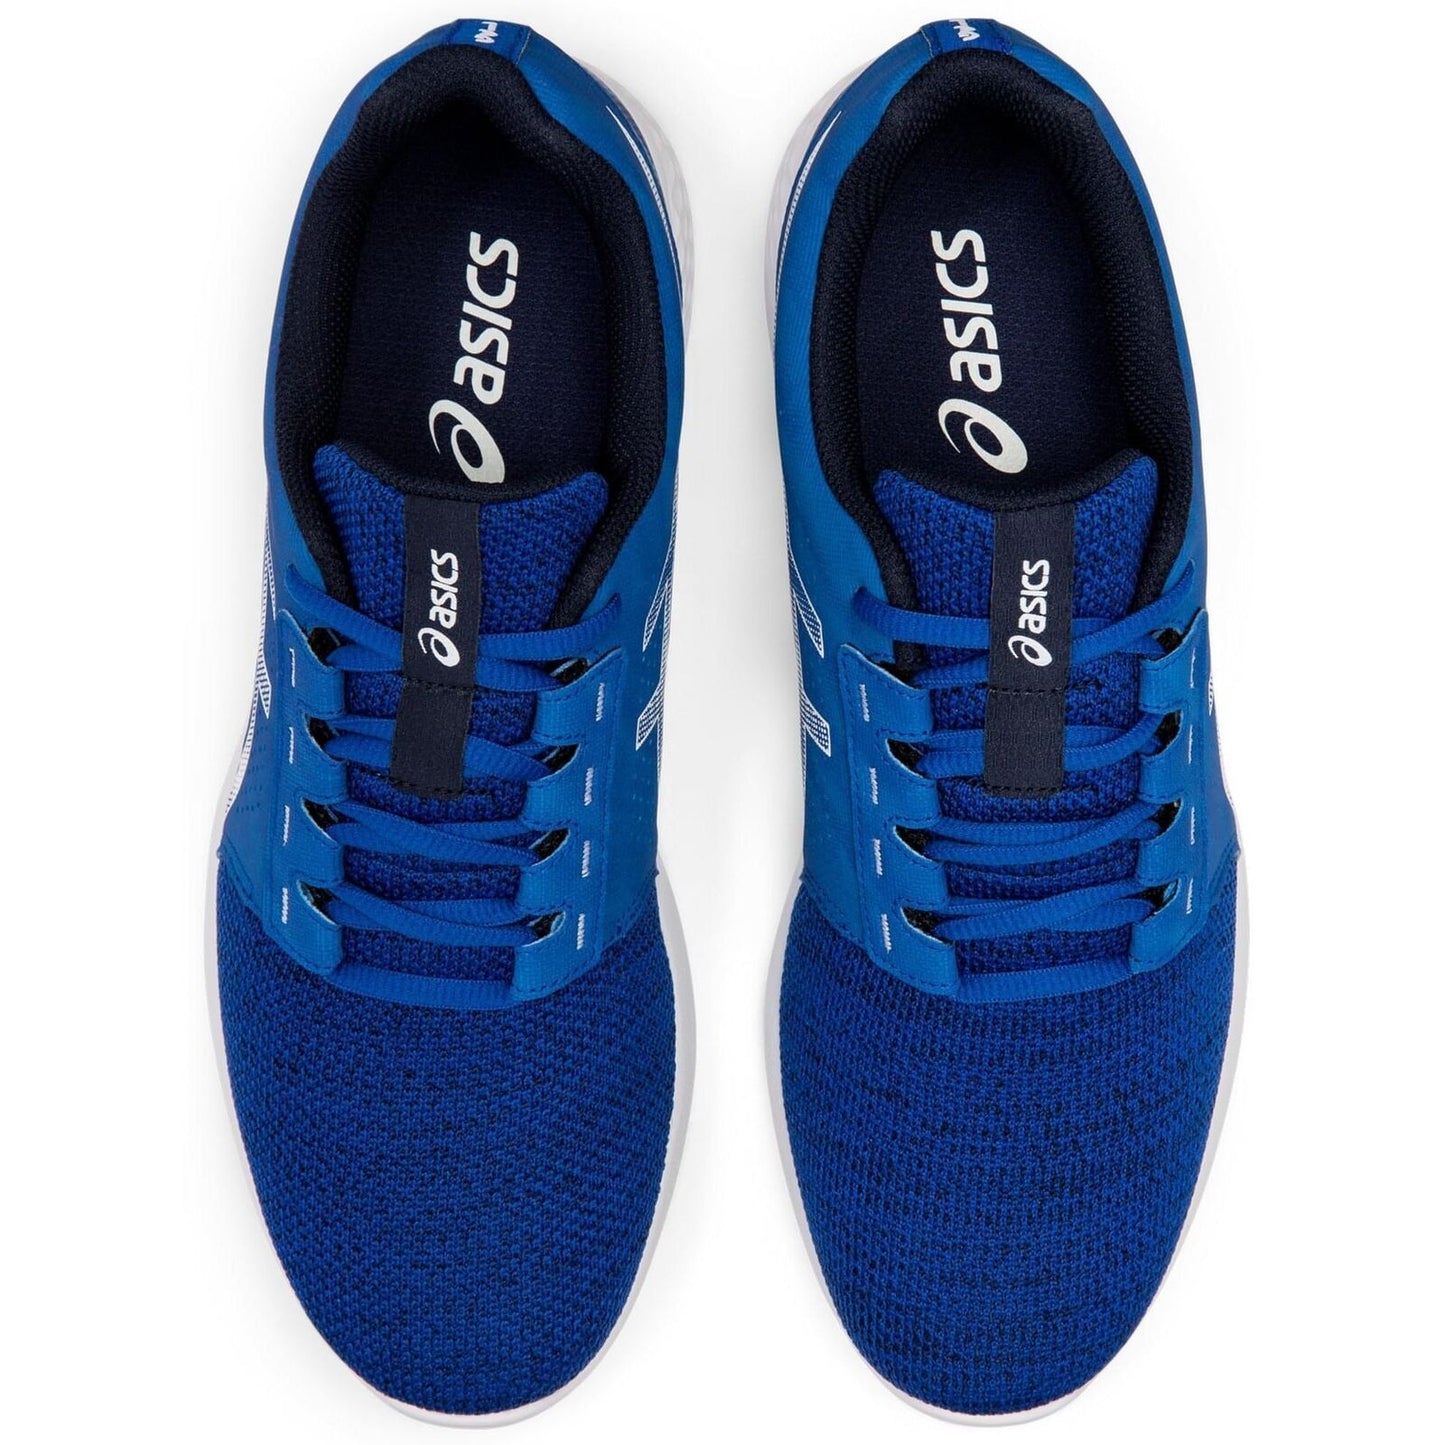 Asics Gel Torrance 2 Mens Running Shoes - Blue